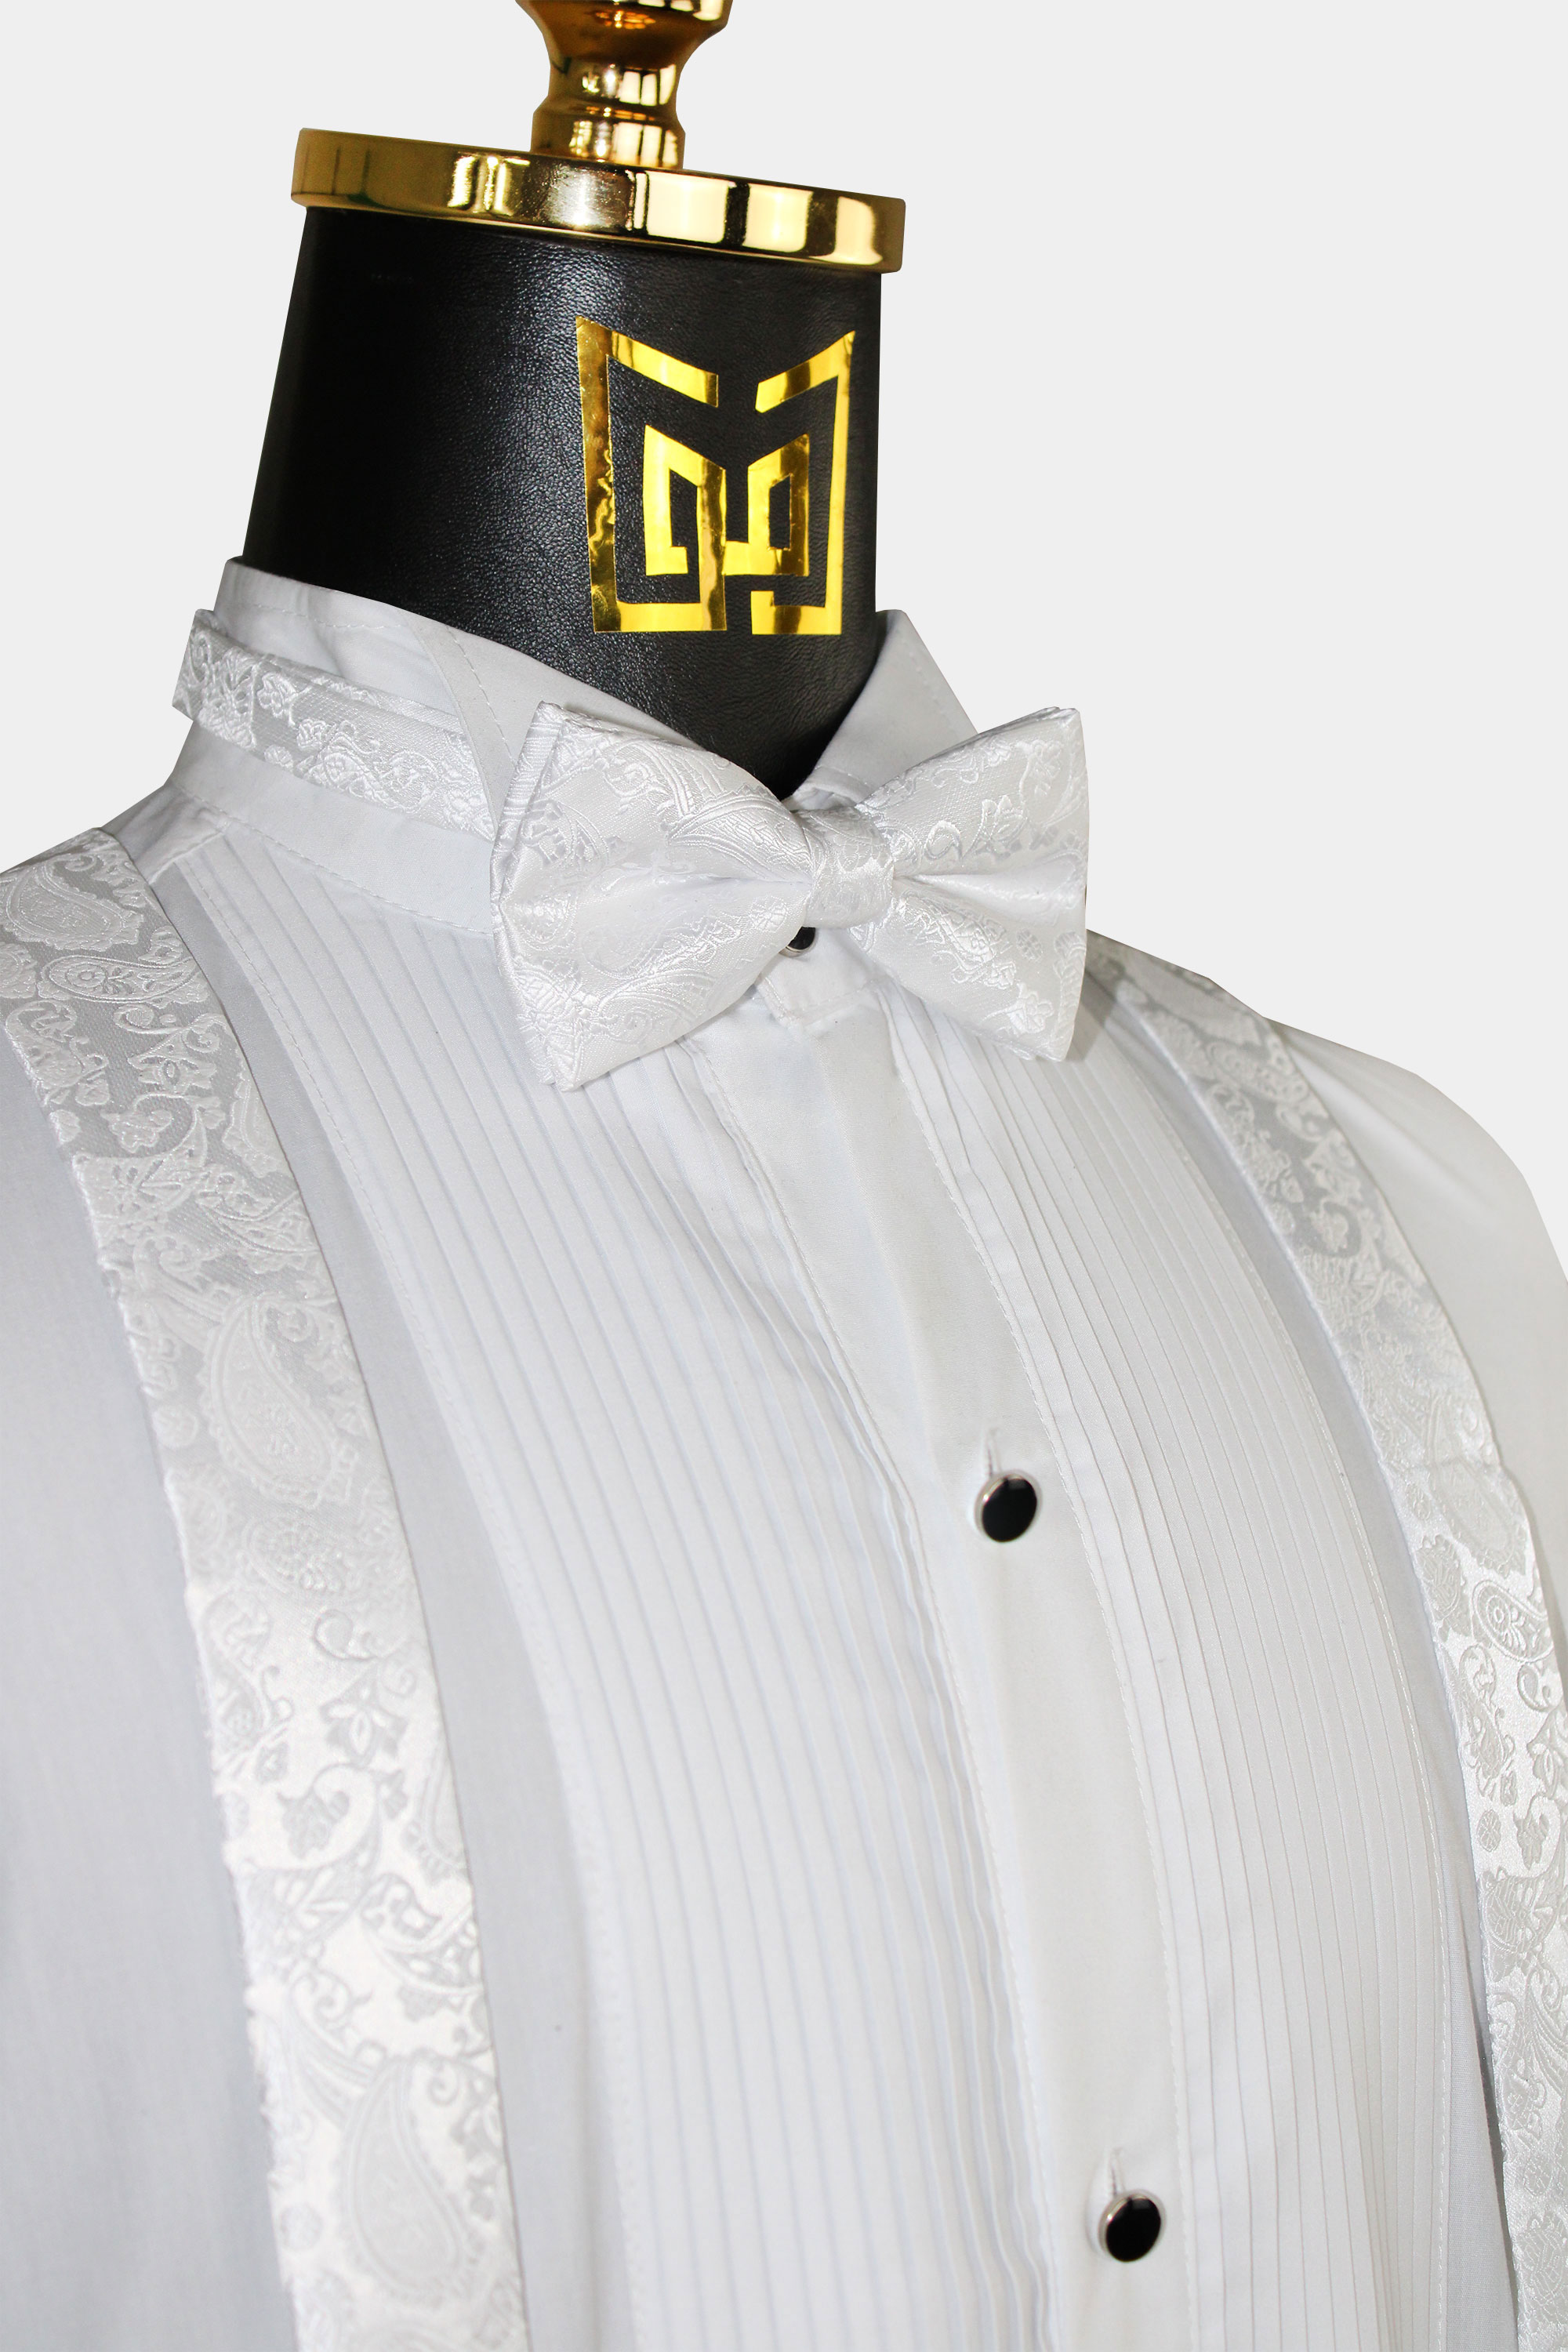 White-Suspenders-and-Bow-Tie-Set-Wedding-Groomsmen-Prom-from-Gentlemansguru.com